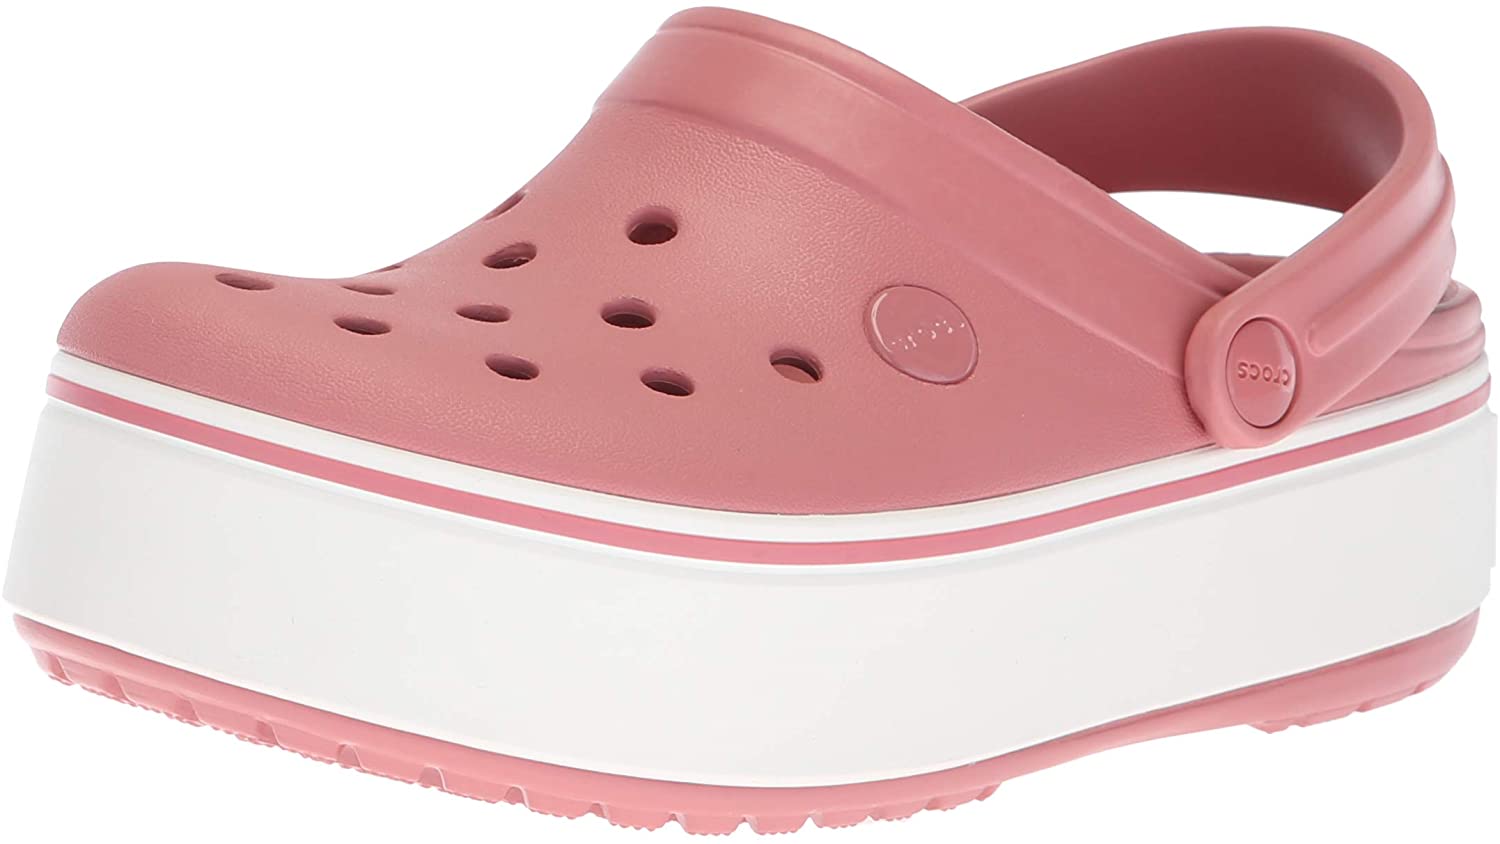 Chanel inspired Charmed Crocs  Pink crocs, Crocs fashion, Chanel